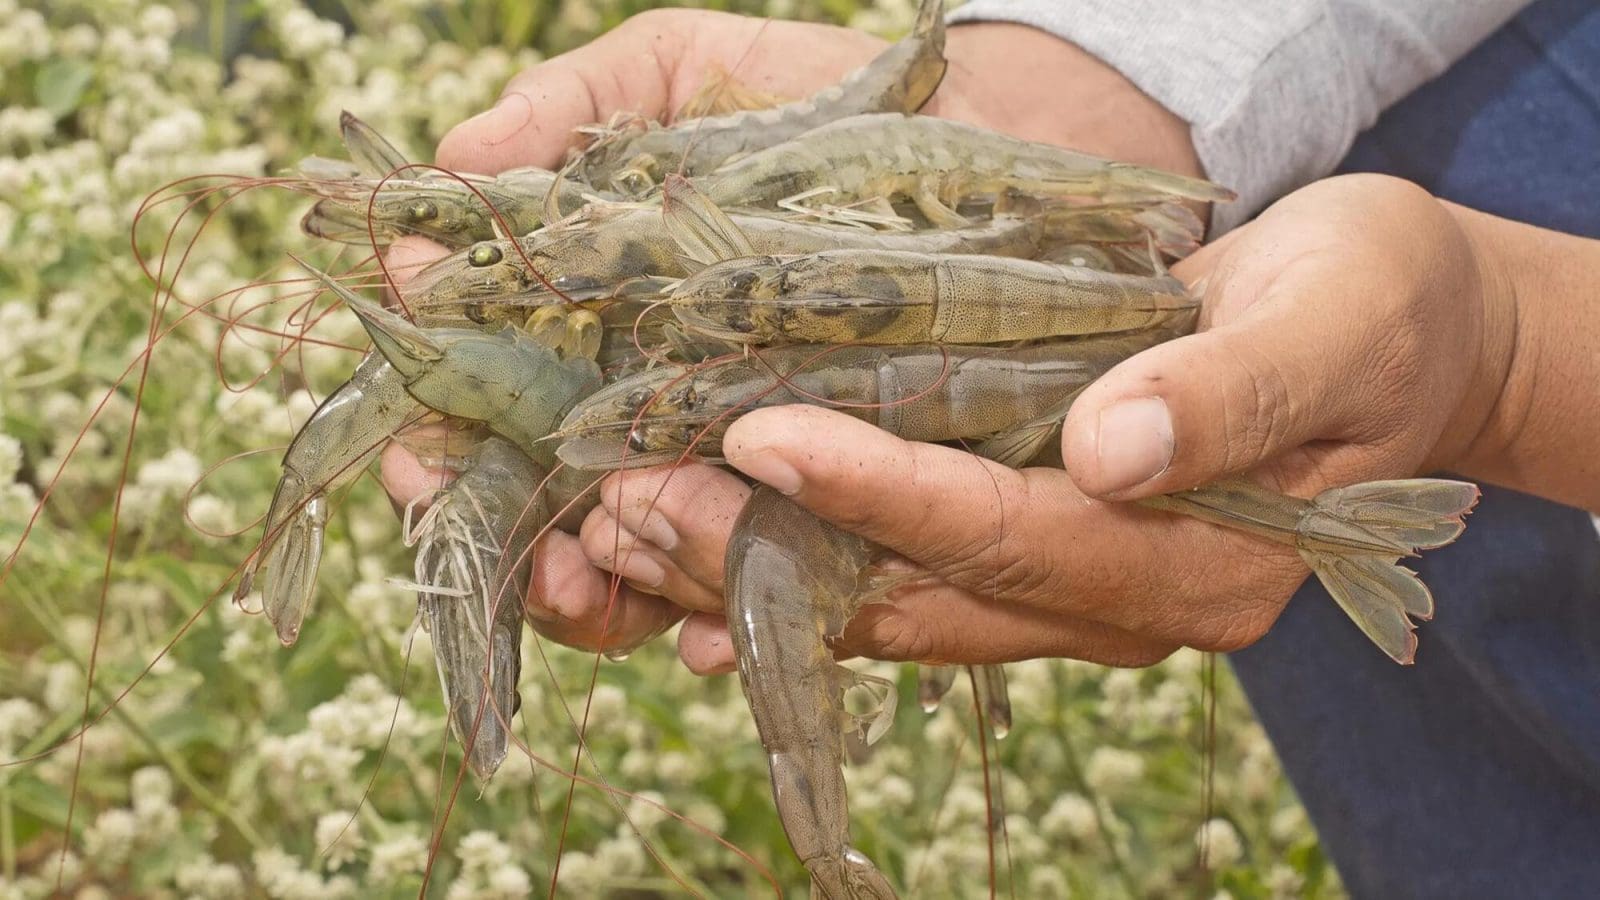 Grupo Almar partners DSM-Firmenich to promote sustainable shrimp farming